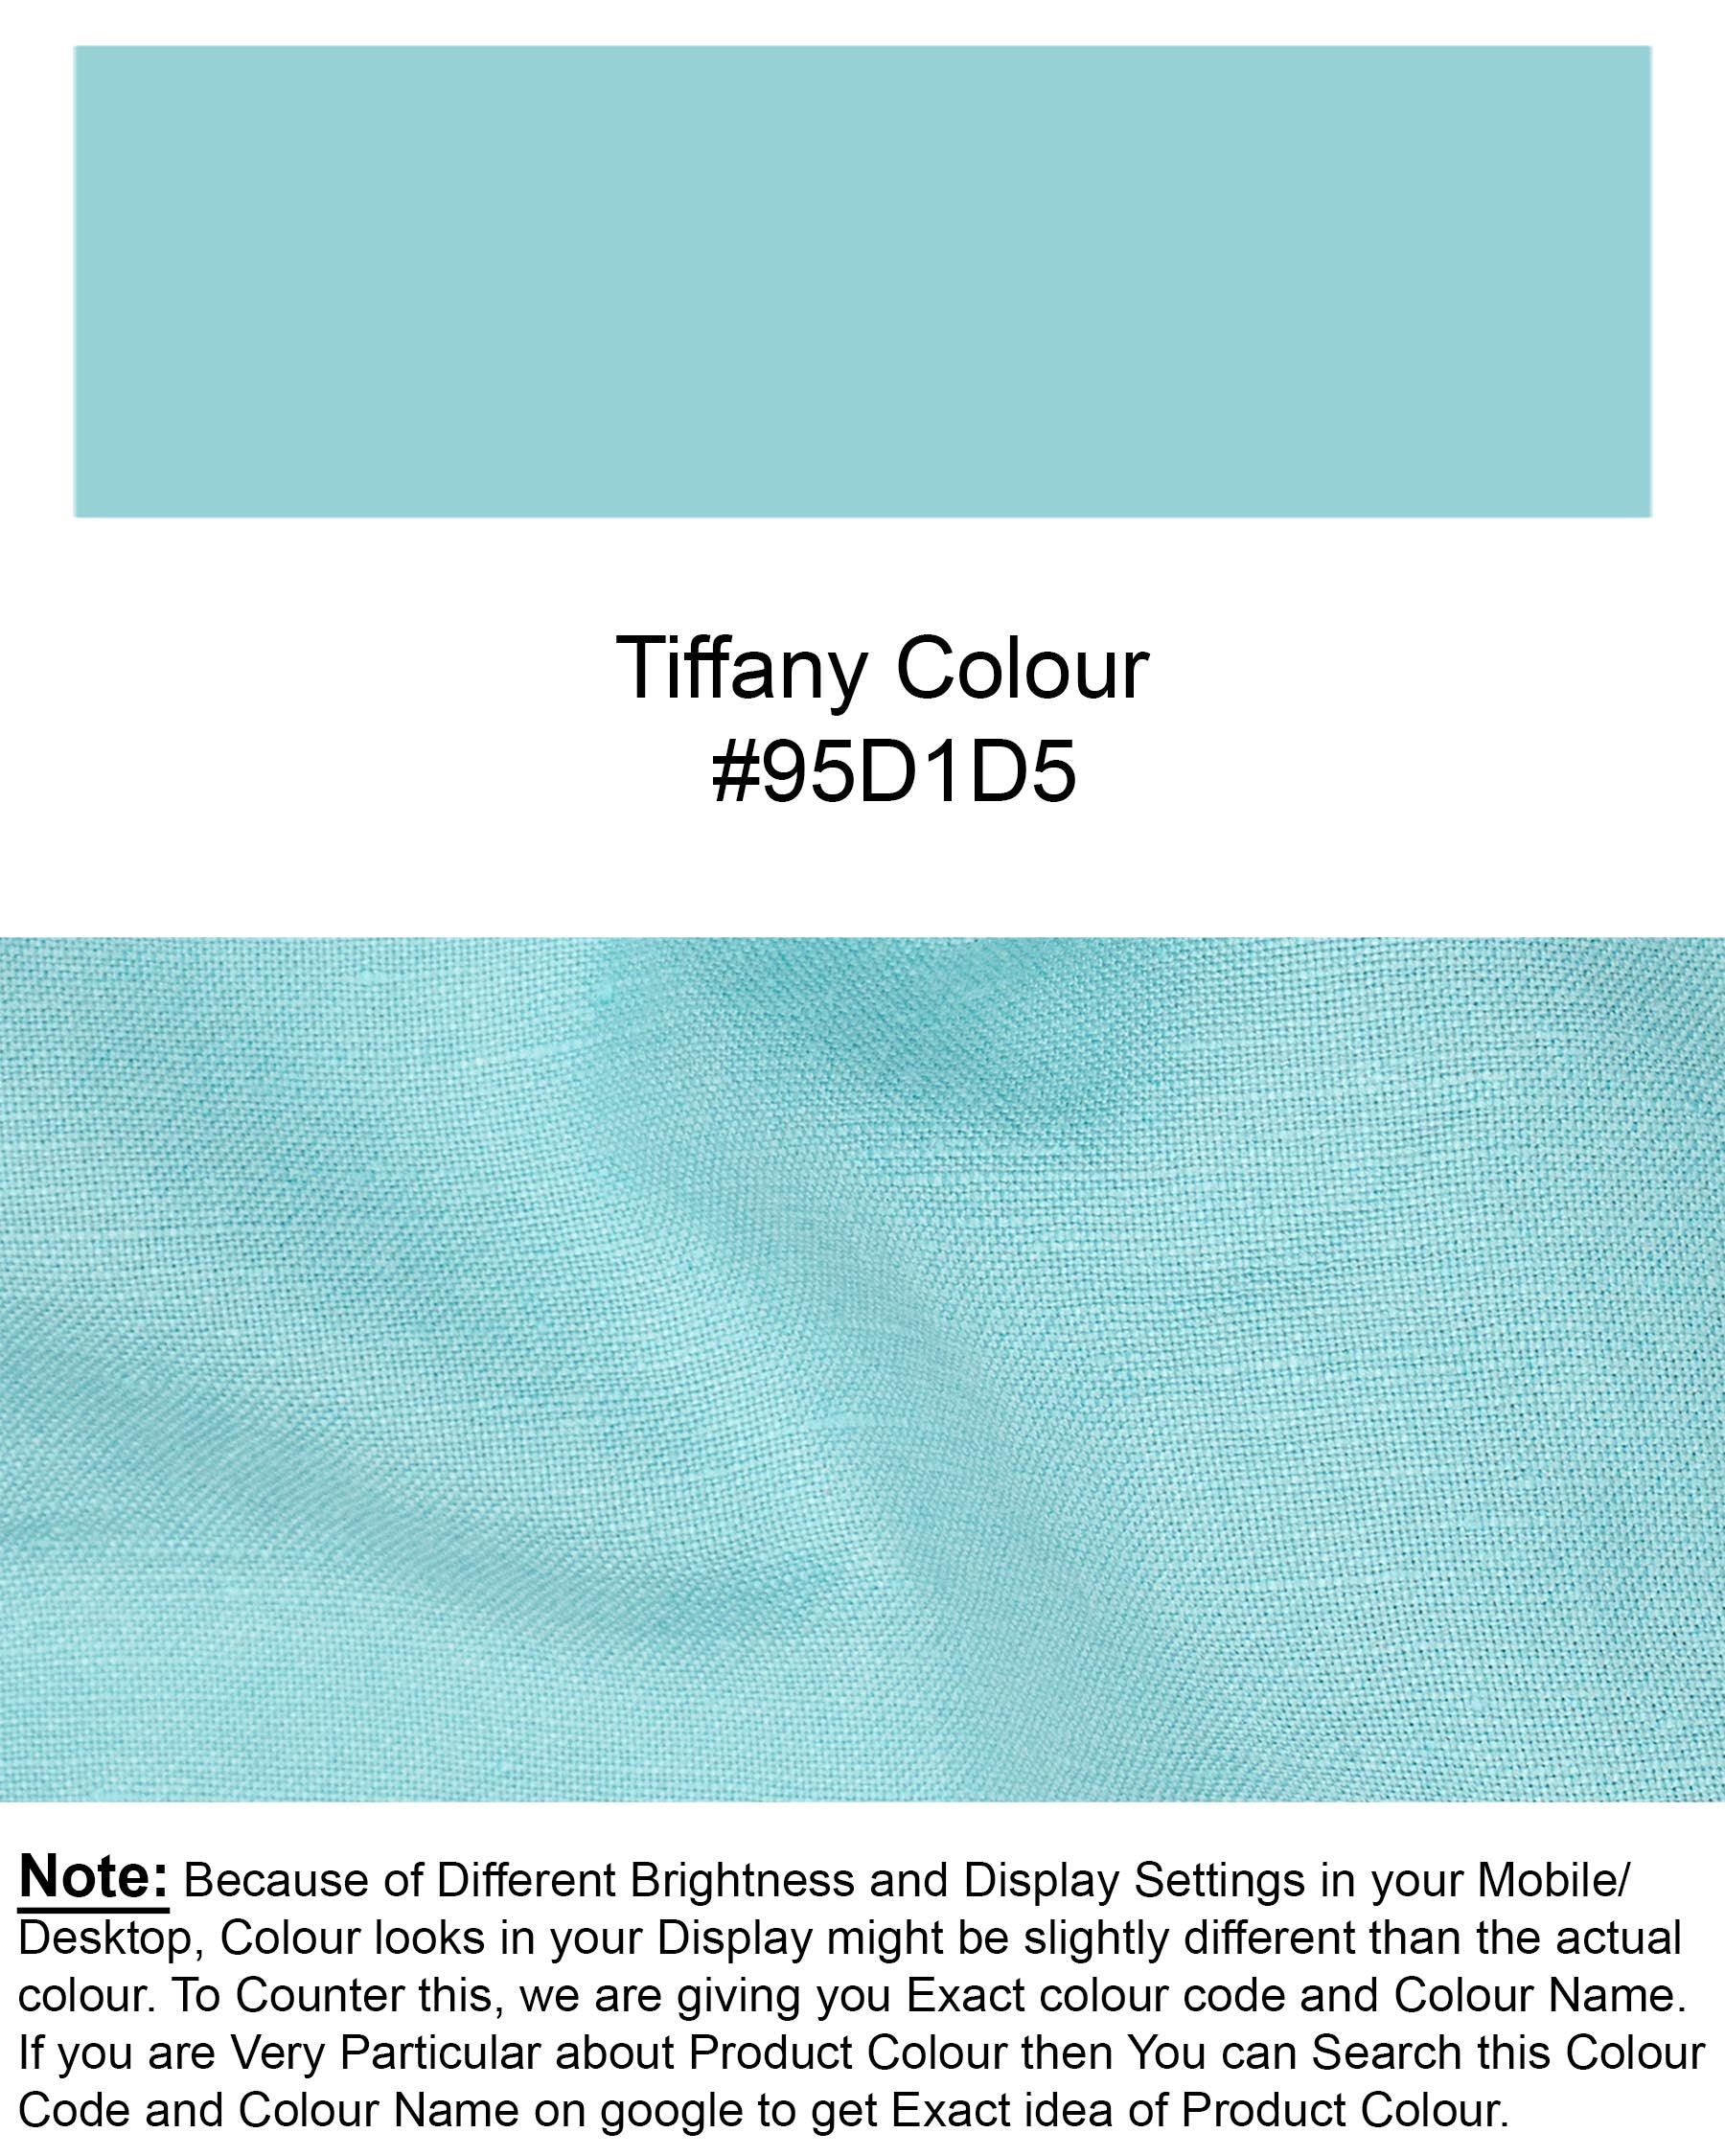 Tiffany Blue Luxurious Linen Shirt 7017-38, 7017-H-38, 7017-39, 7017-H-39, 7017-40, 7017-H-40, 7017-42, 7017-H-42, 7017-44, 7017-H-44, 7017-46, 7017-H-46, 7017-48, 7017-H-48, 7017-50, 7017-H-50, 7017-52, 7017-H-52